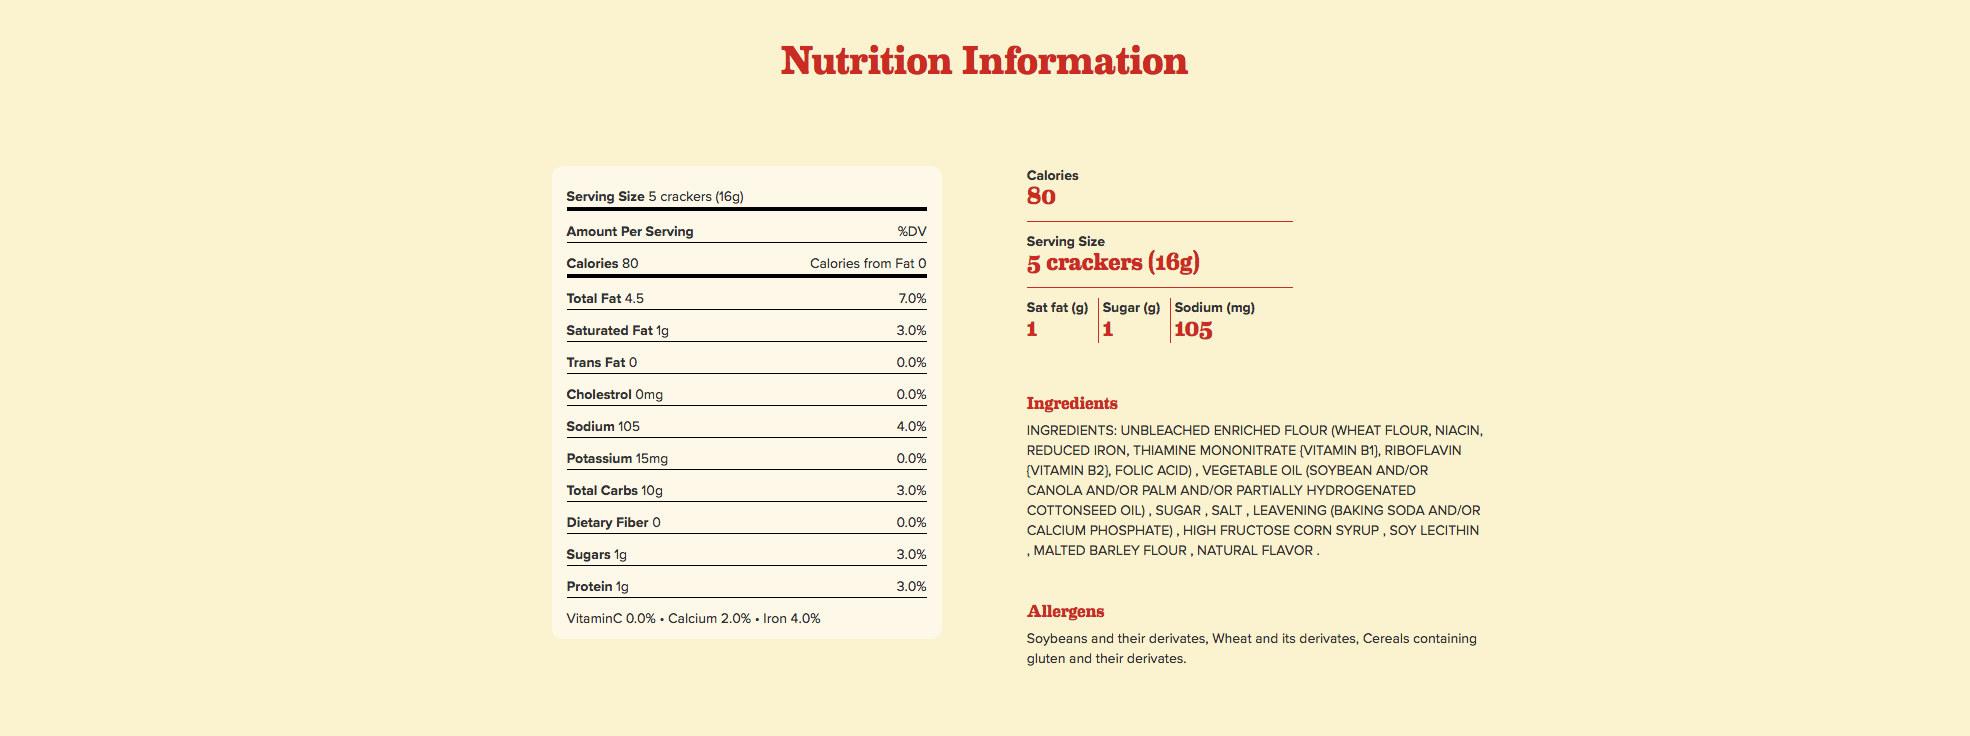 Ritz crackers nutrition label